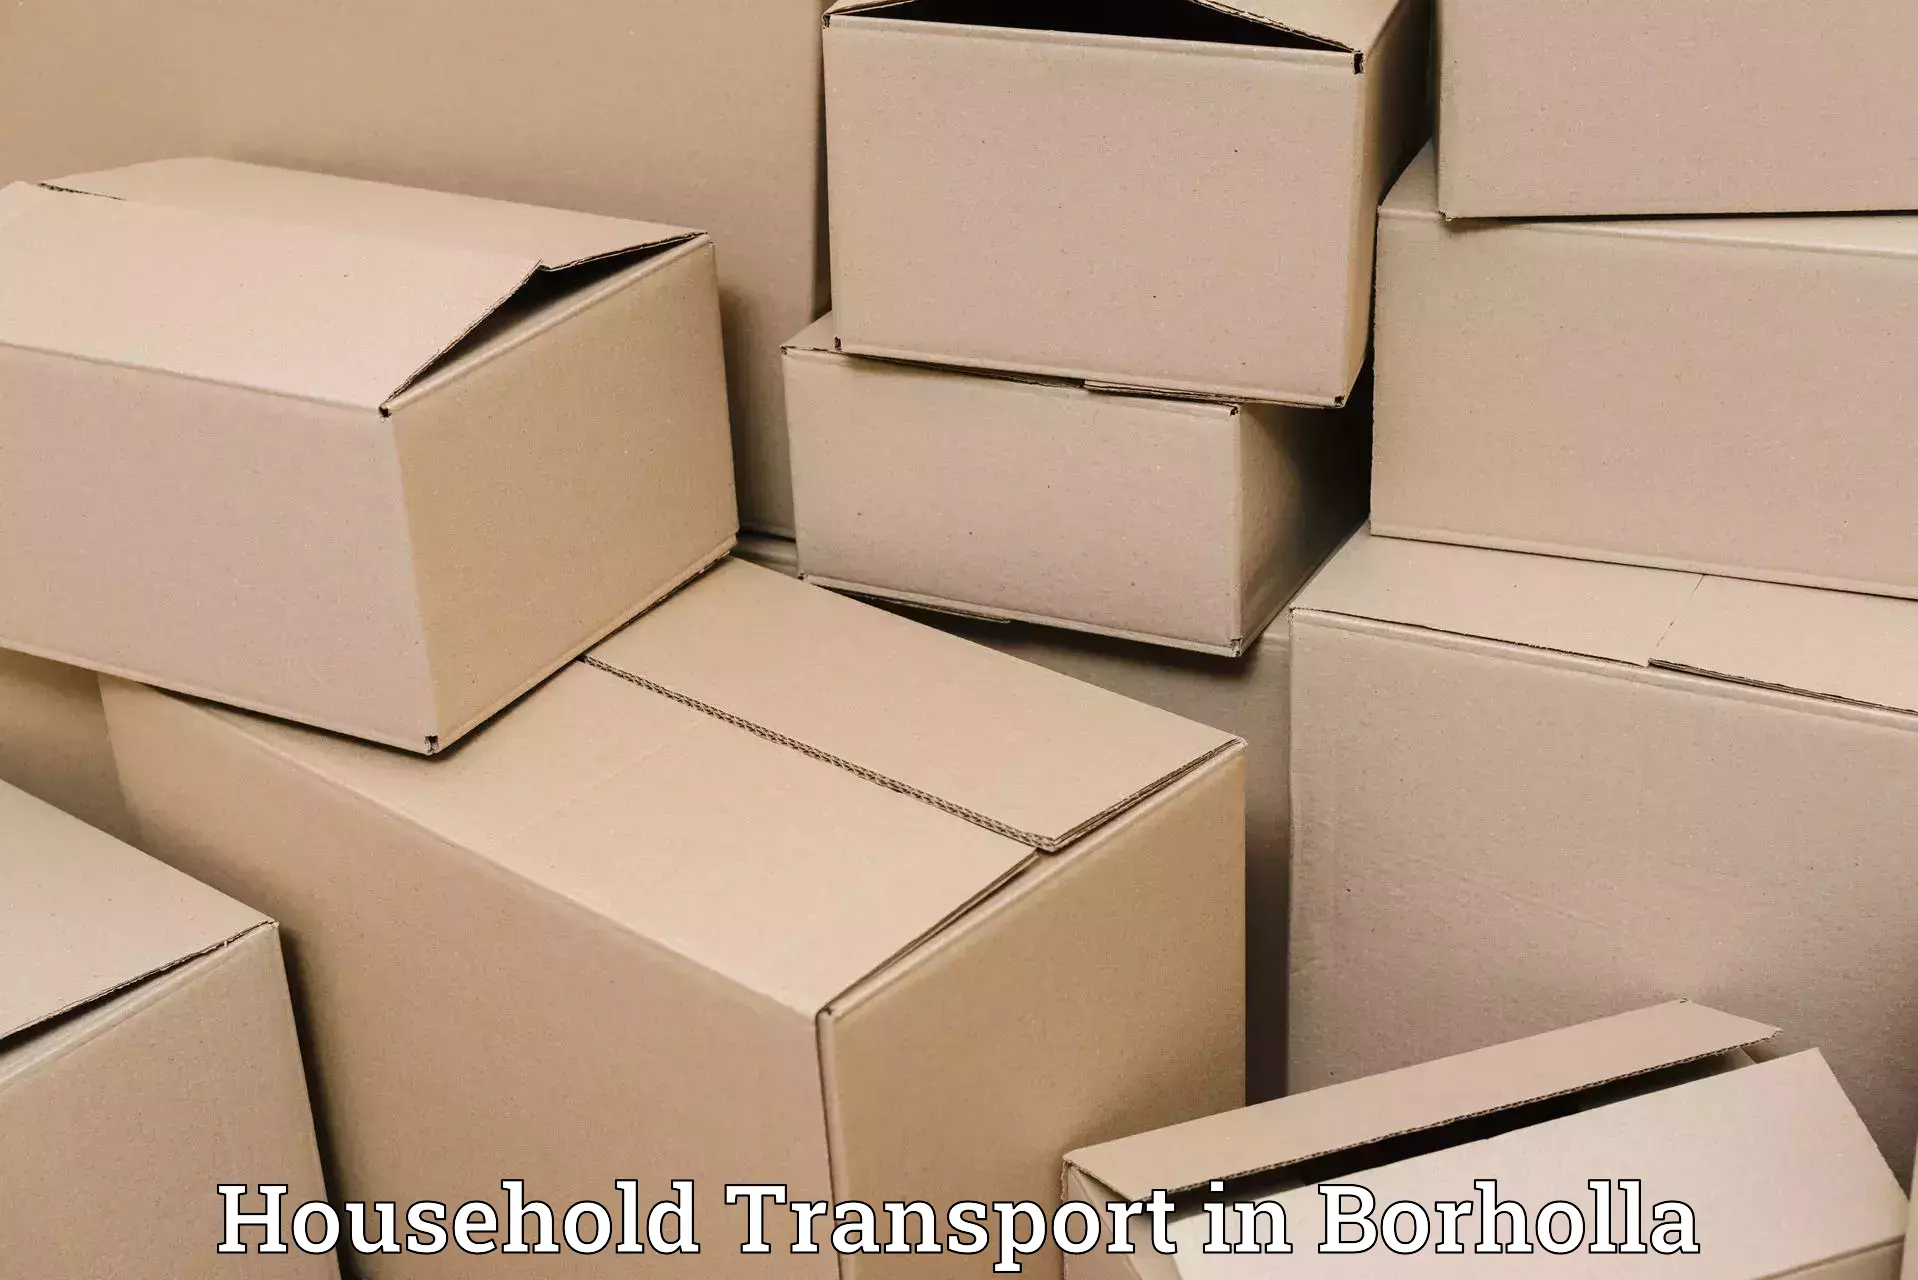 Household goods transport in Borholla